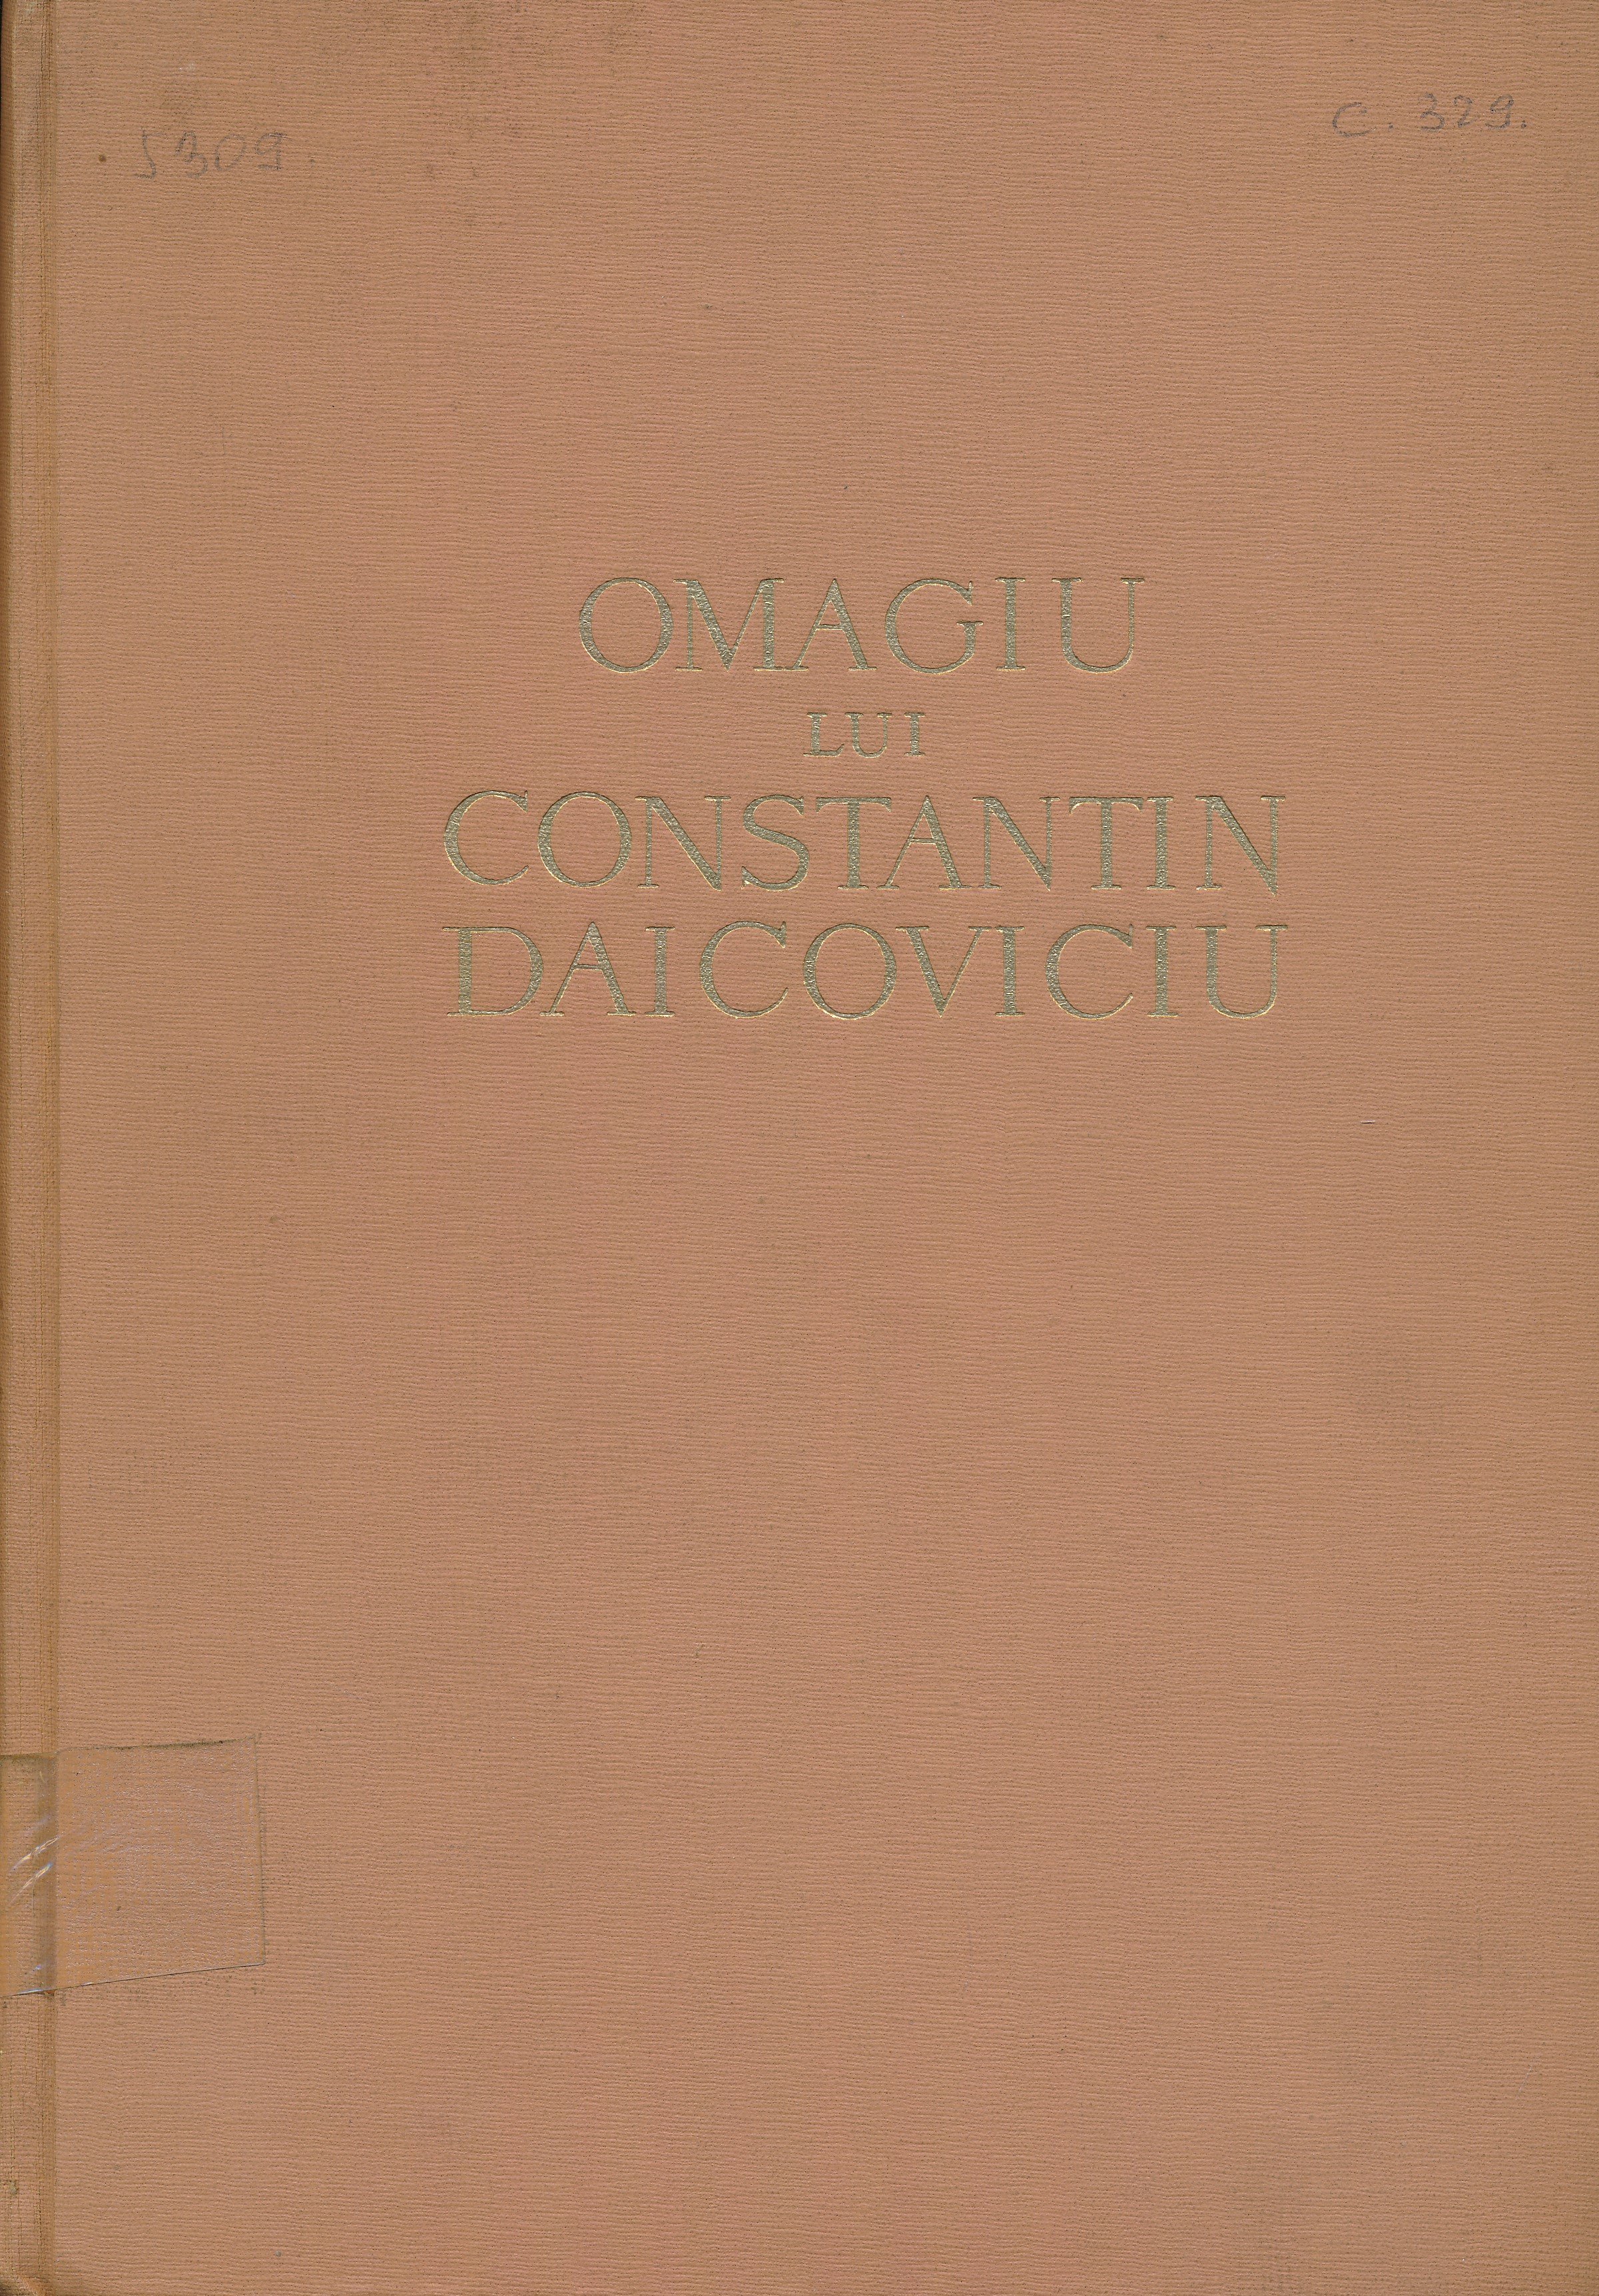 Omagiu Lui Constantin Daicoviciu (Erkel Ferenc Múzeum és Könyvtár, Gyula CC BY-NC-SA)